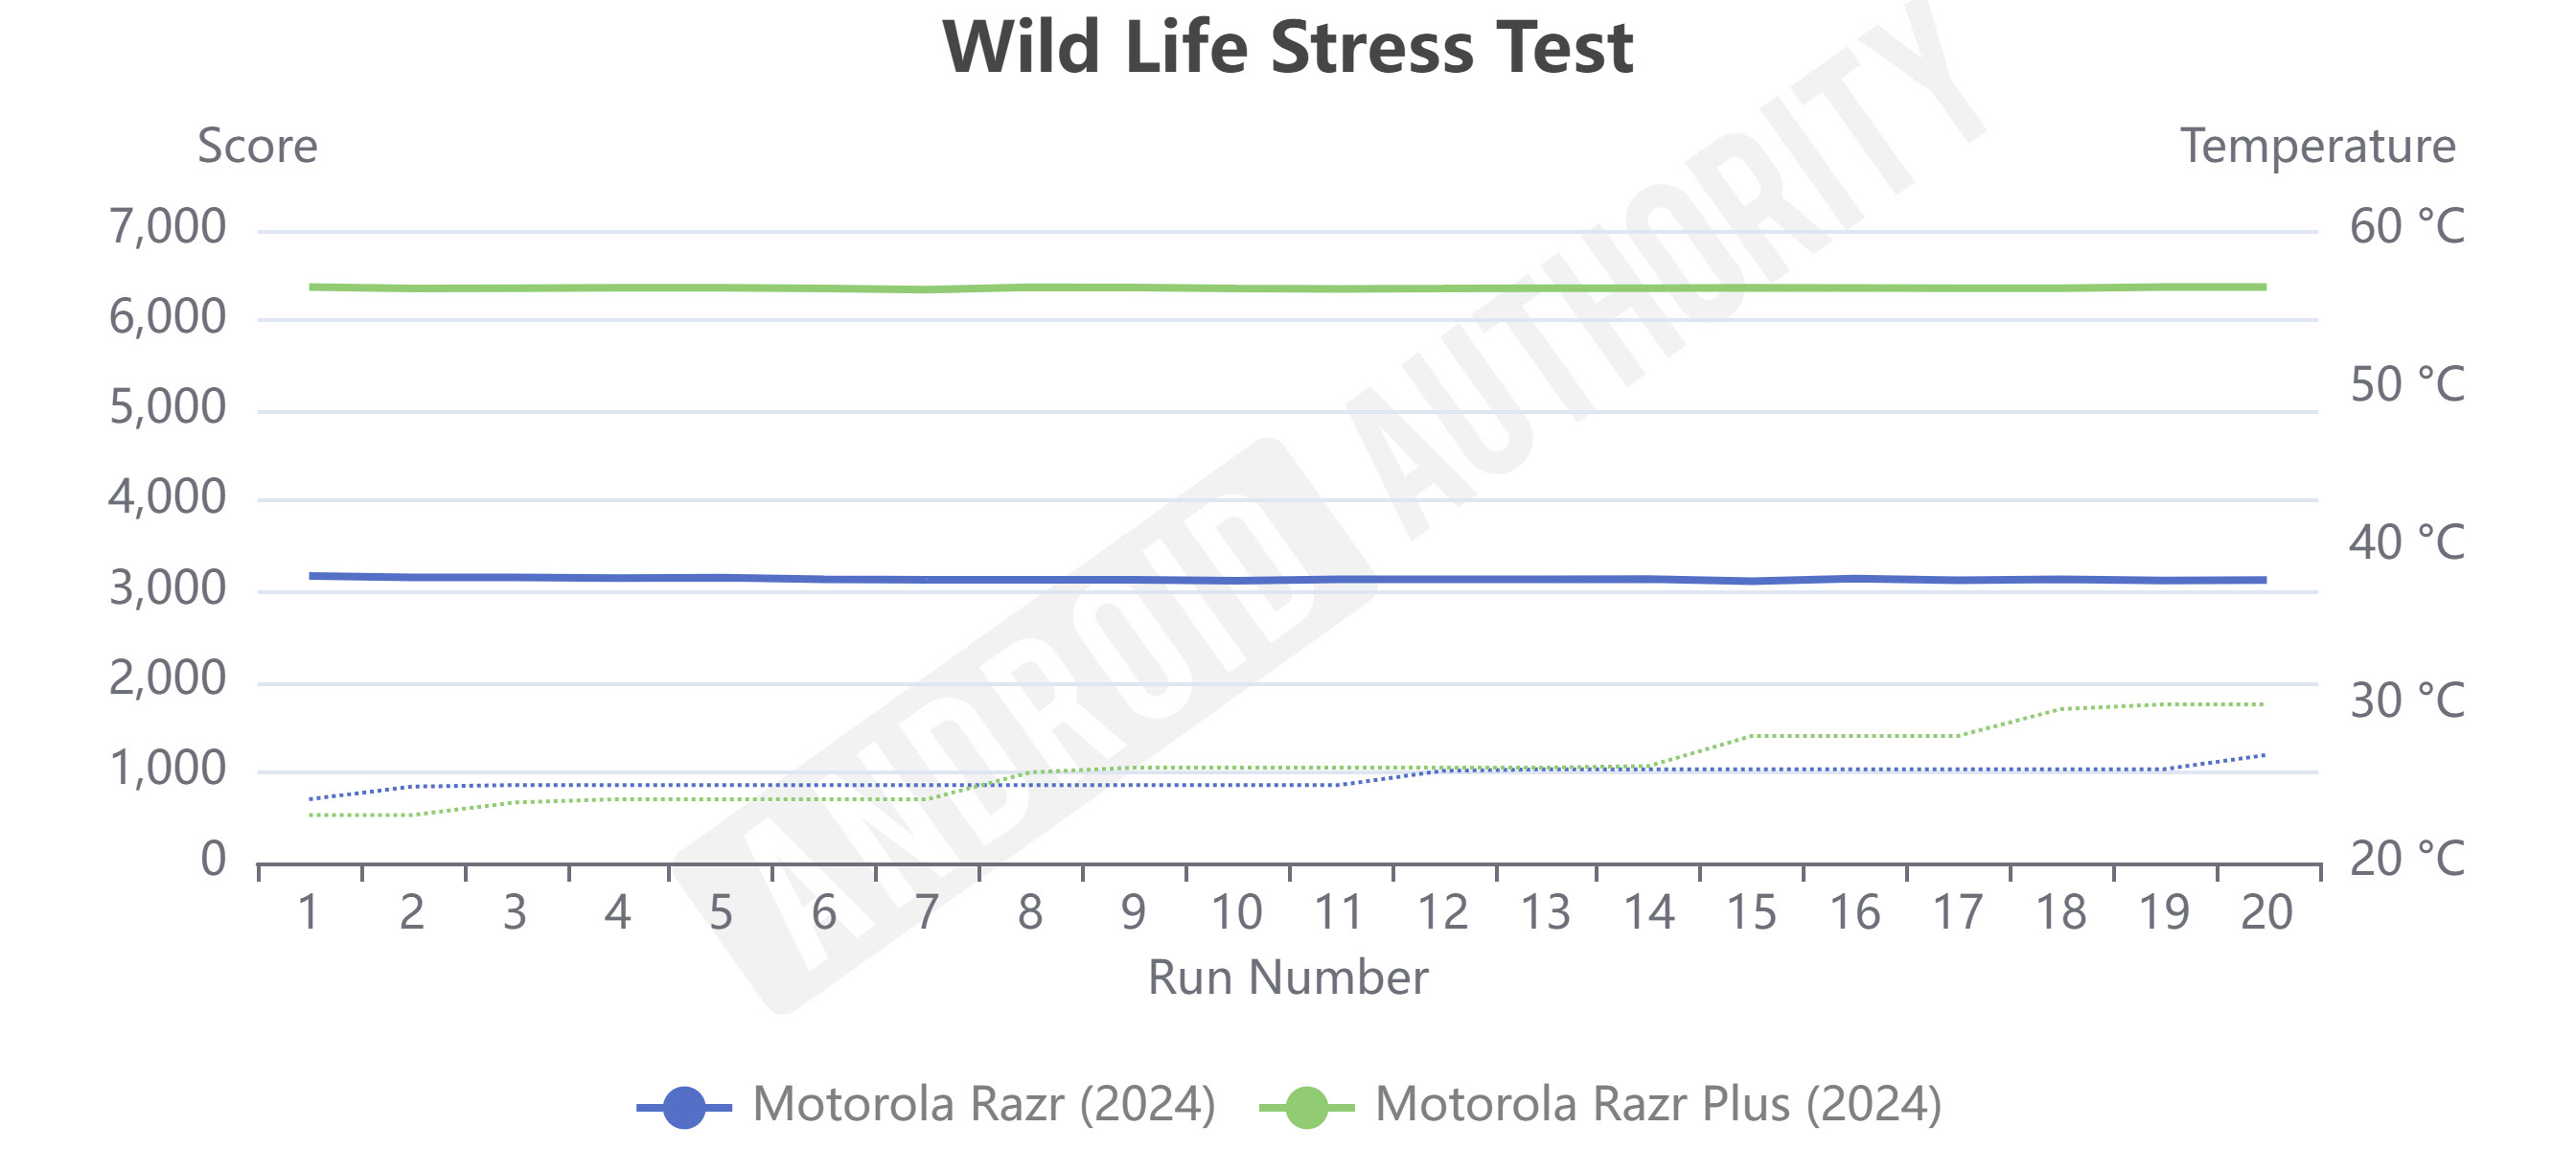 Motorola Razr 2024 vs Razr Plus 2024 Wild Life Stress Test